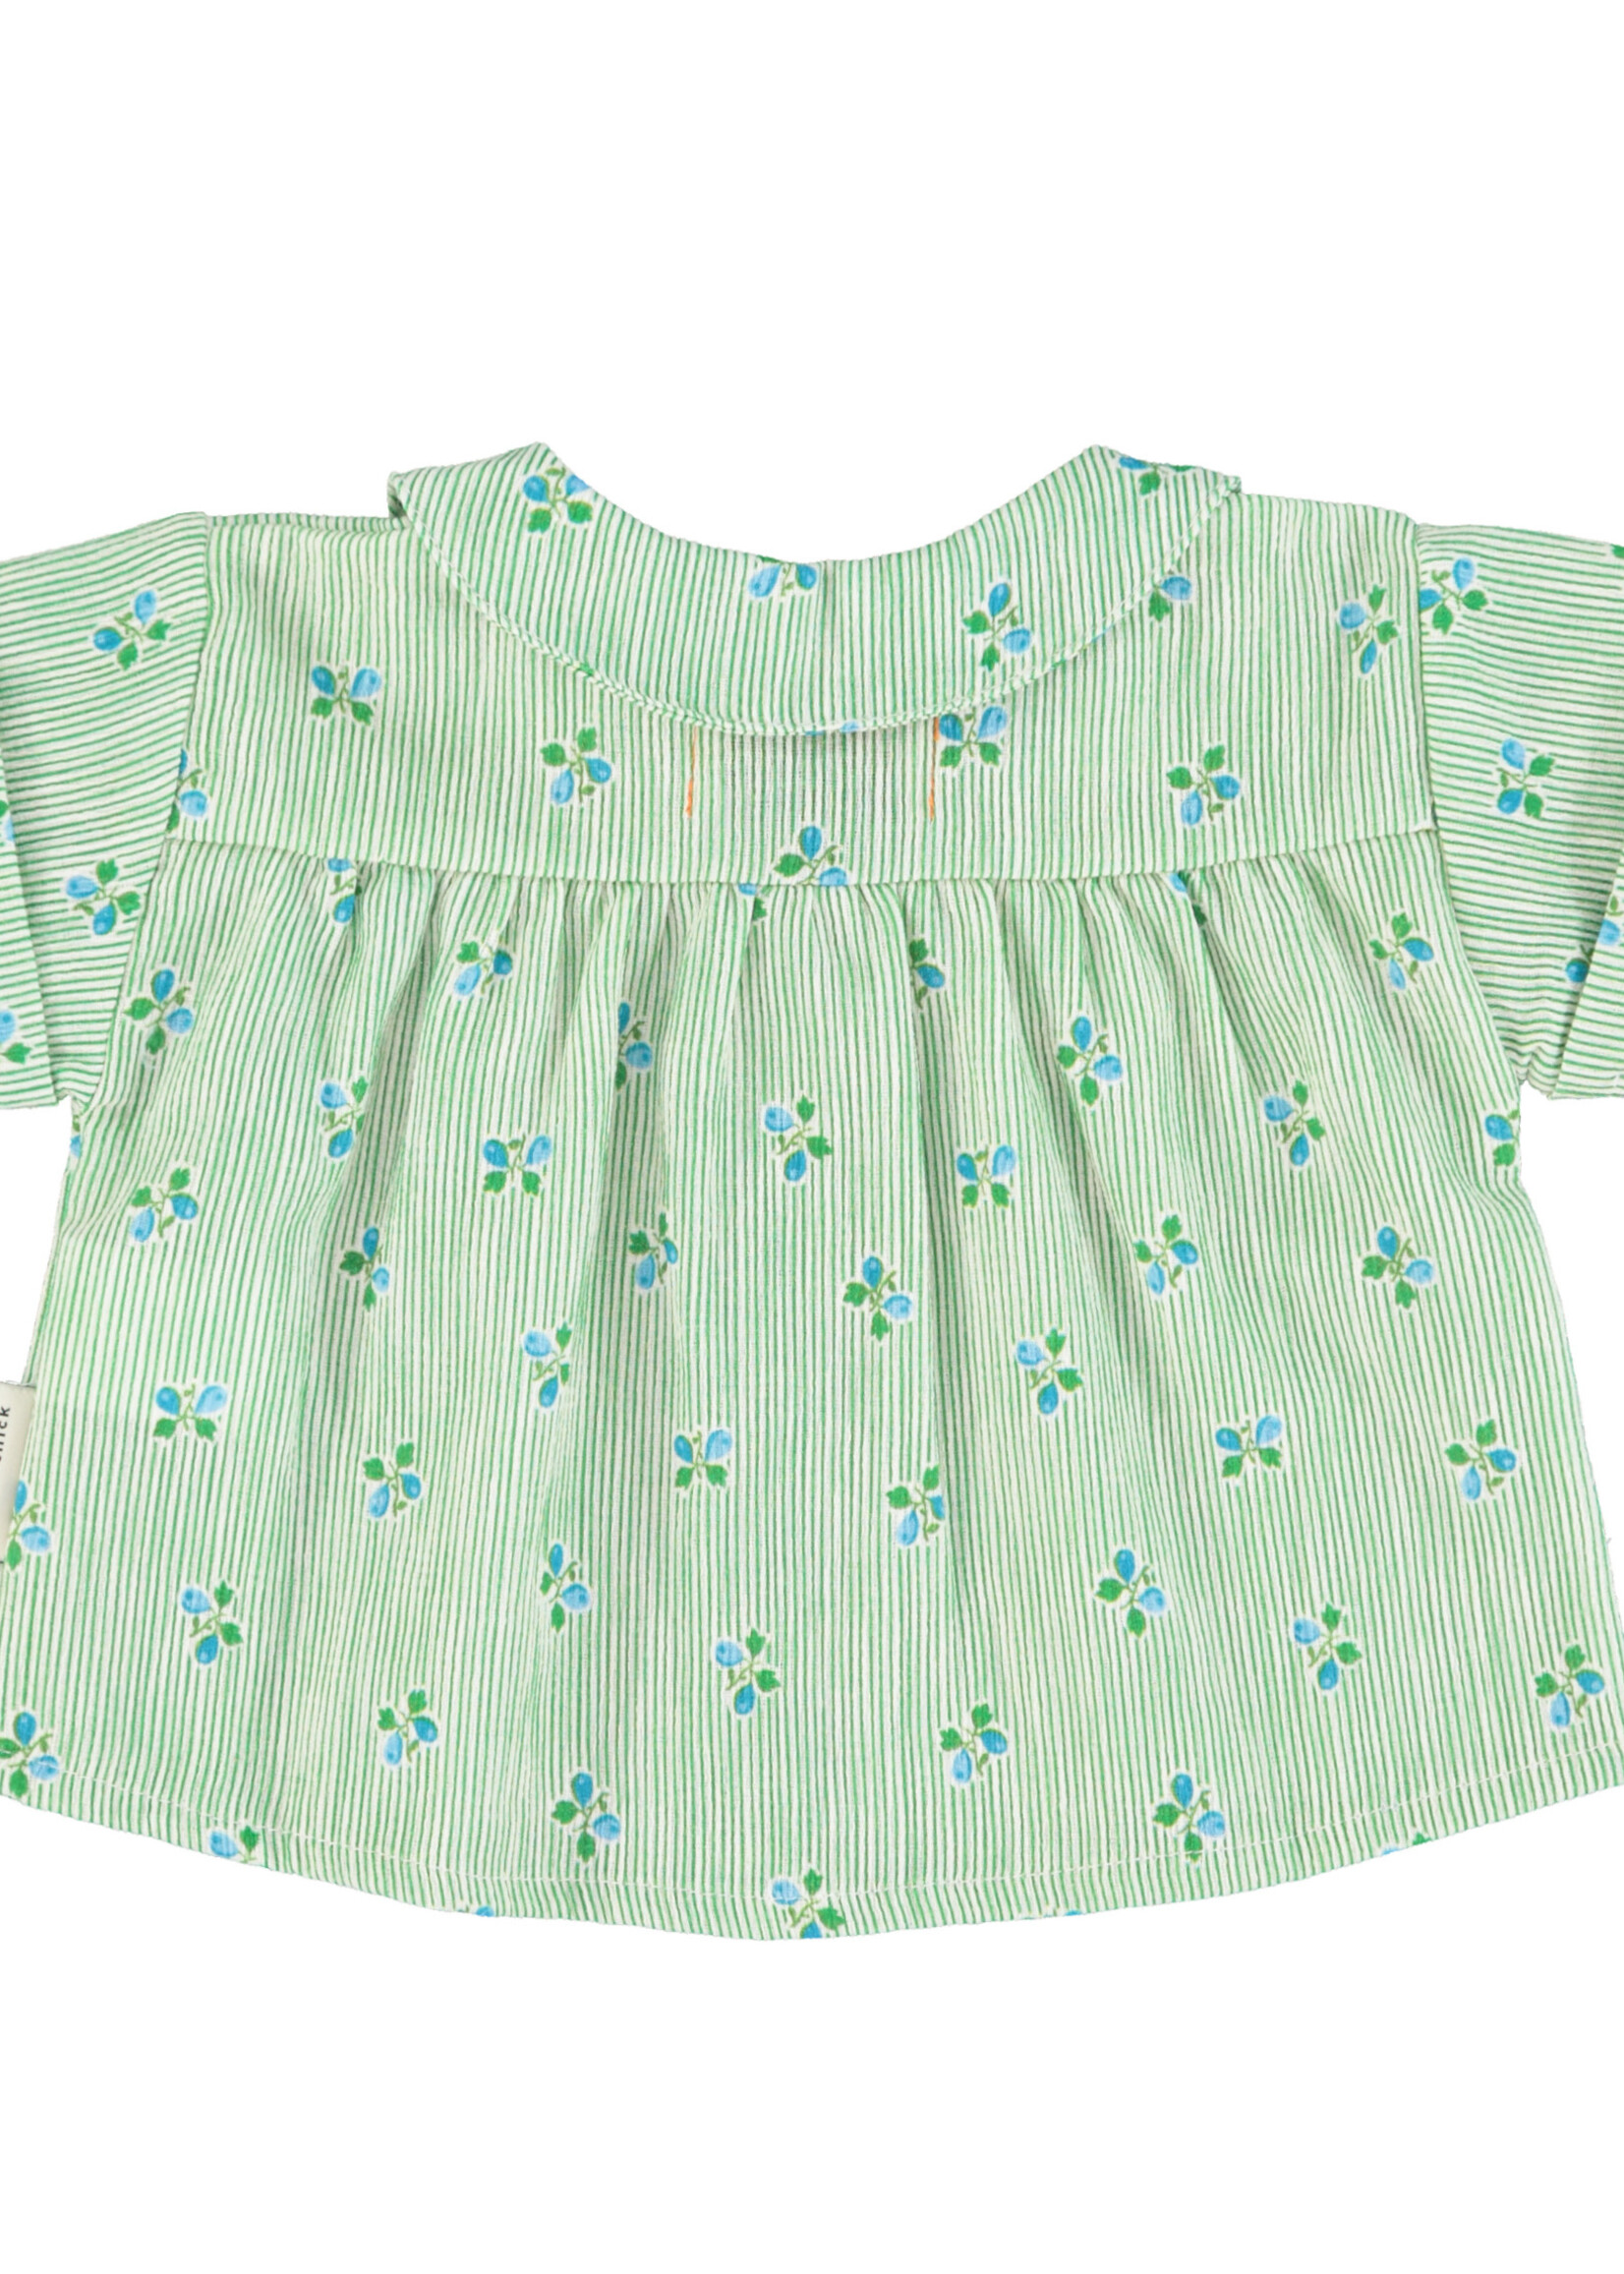 Piupiuchick Peter pan collar shirt green stripes w/ flowers - Piupiuchick